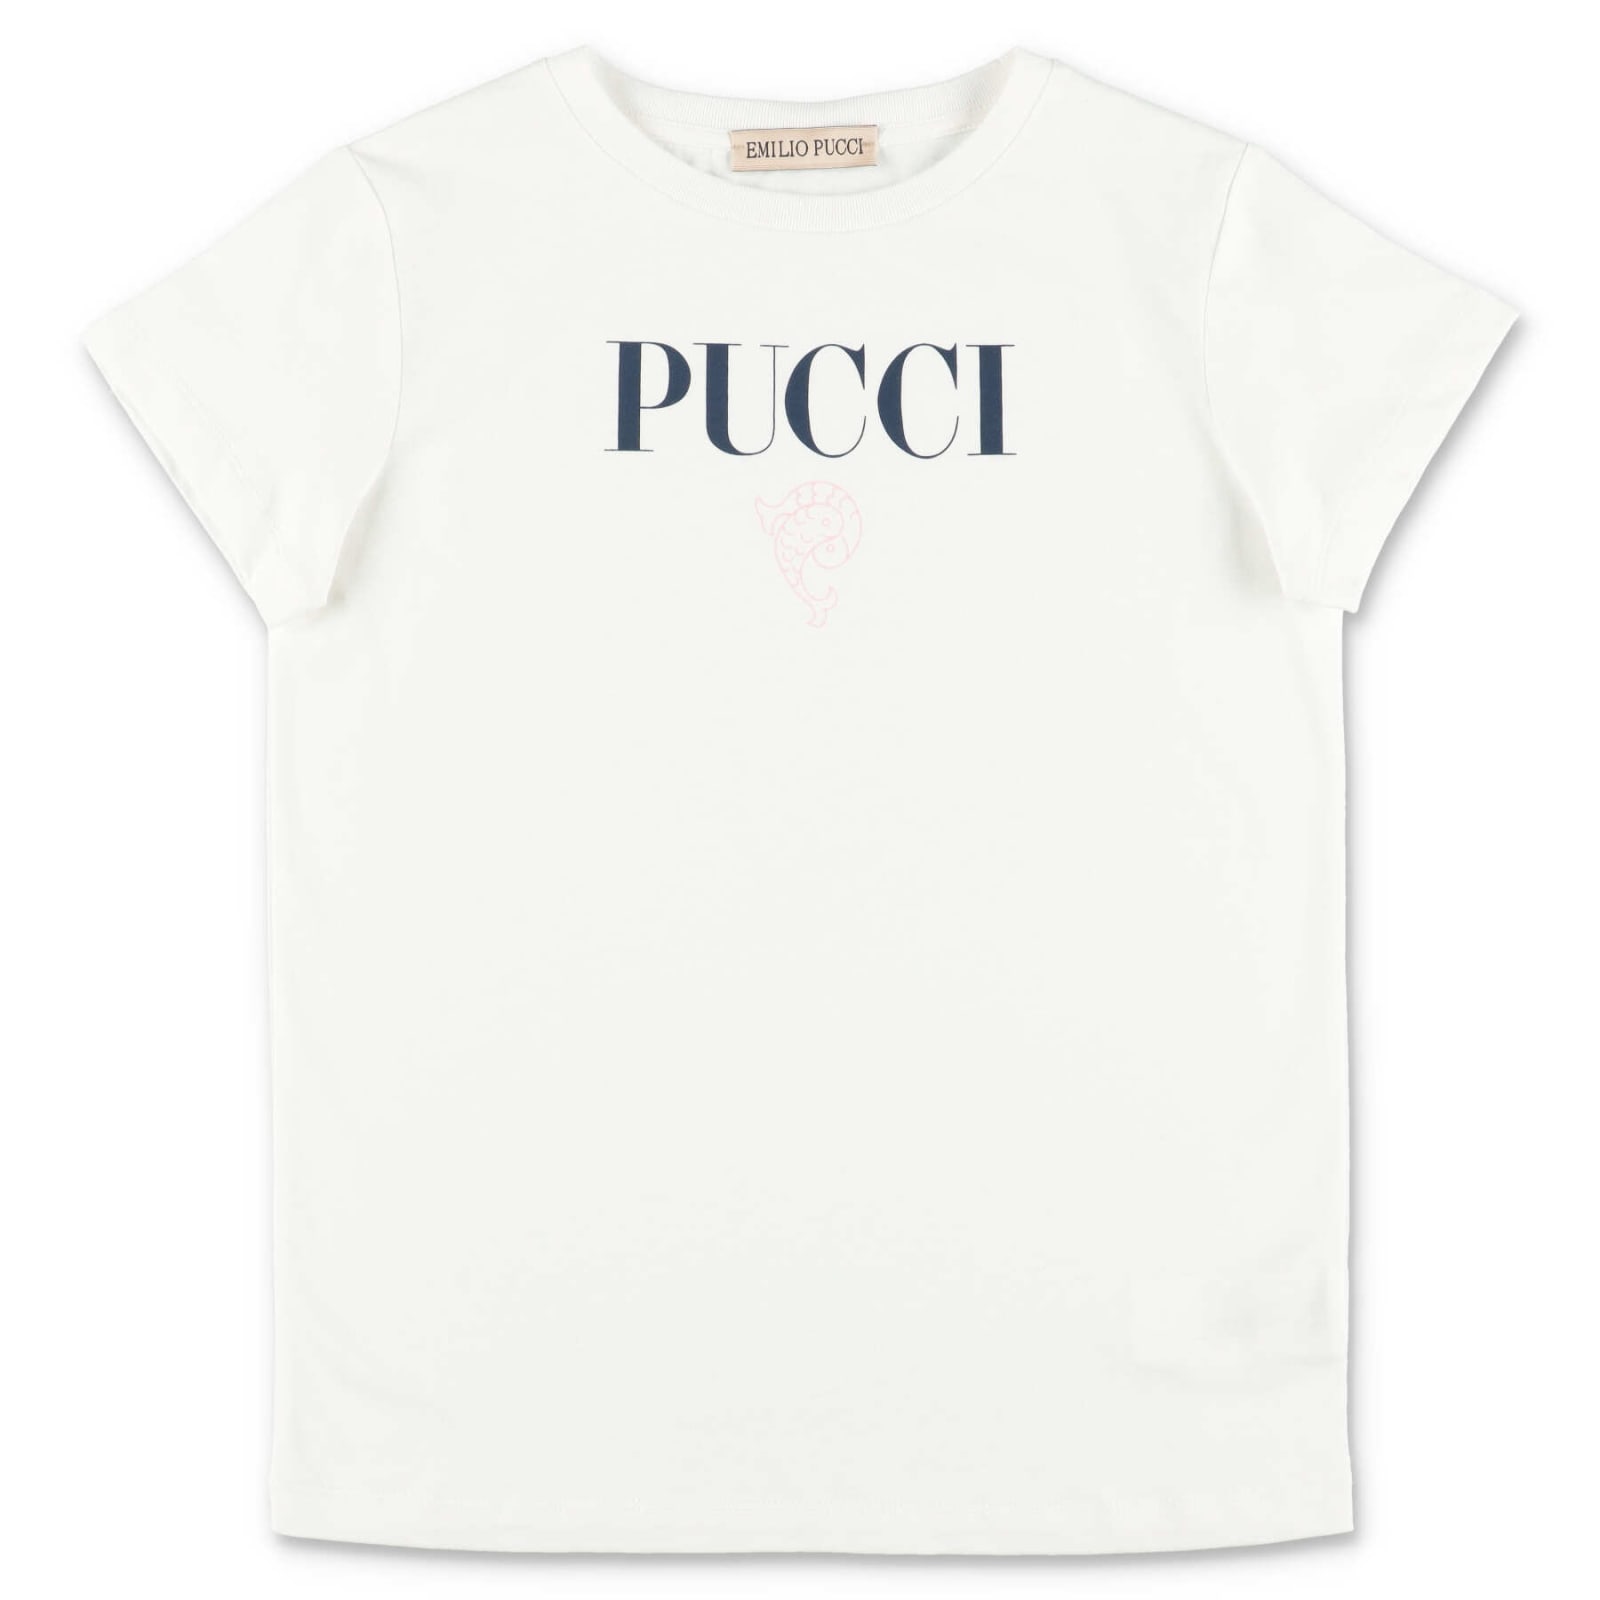 Emilio Pucci T-shirt Bianca In Jersey Di Cotone Bambina